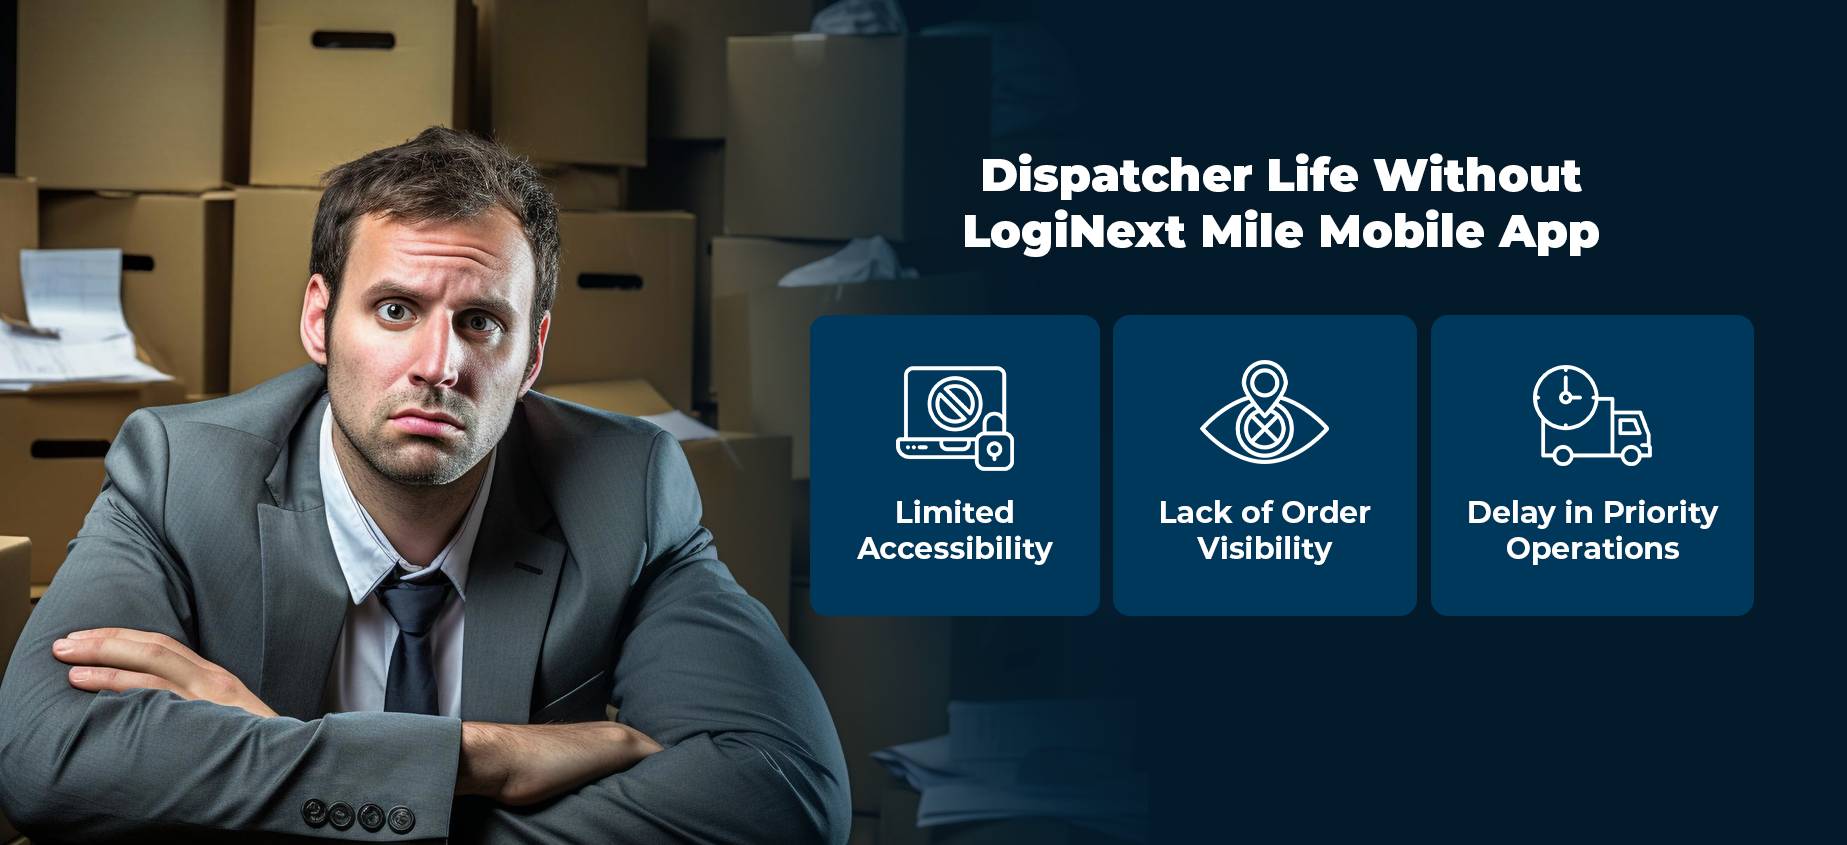 Dispatcher Life Without Mile mobilapp